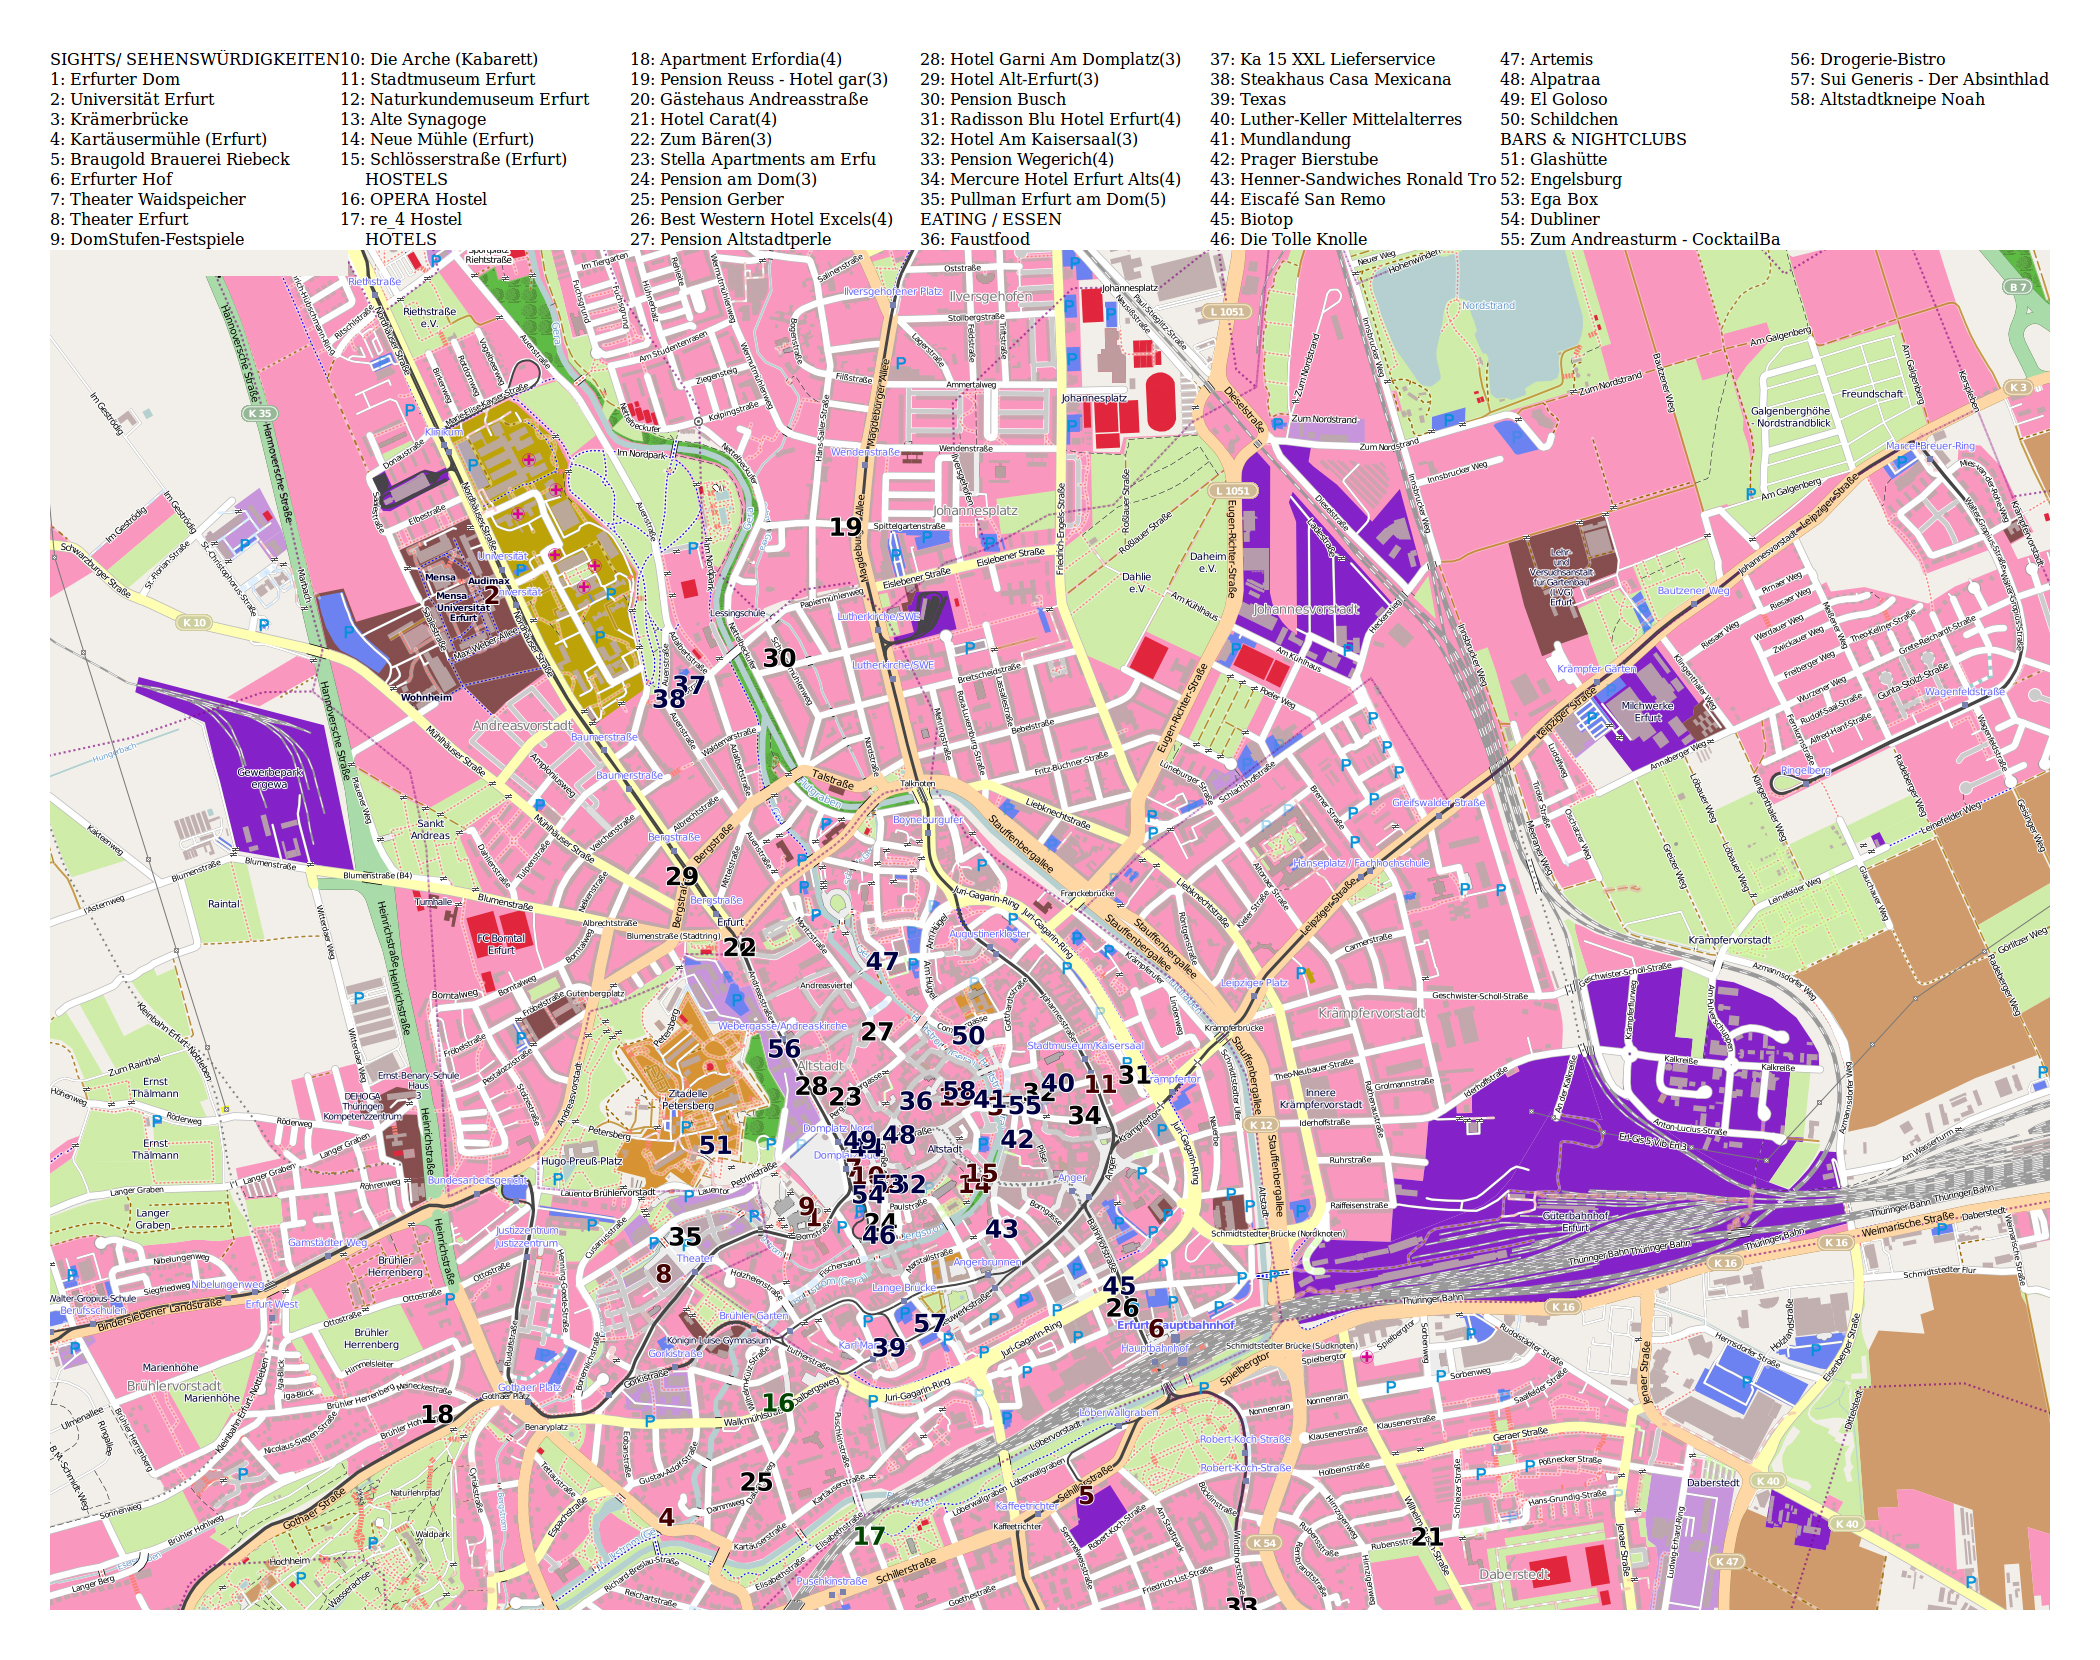 Large tourist map of Erfurt city | Erfurt | Germany | Europe | Mapsland